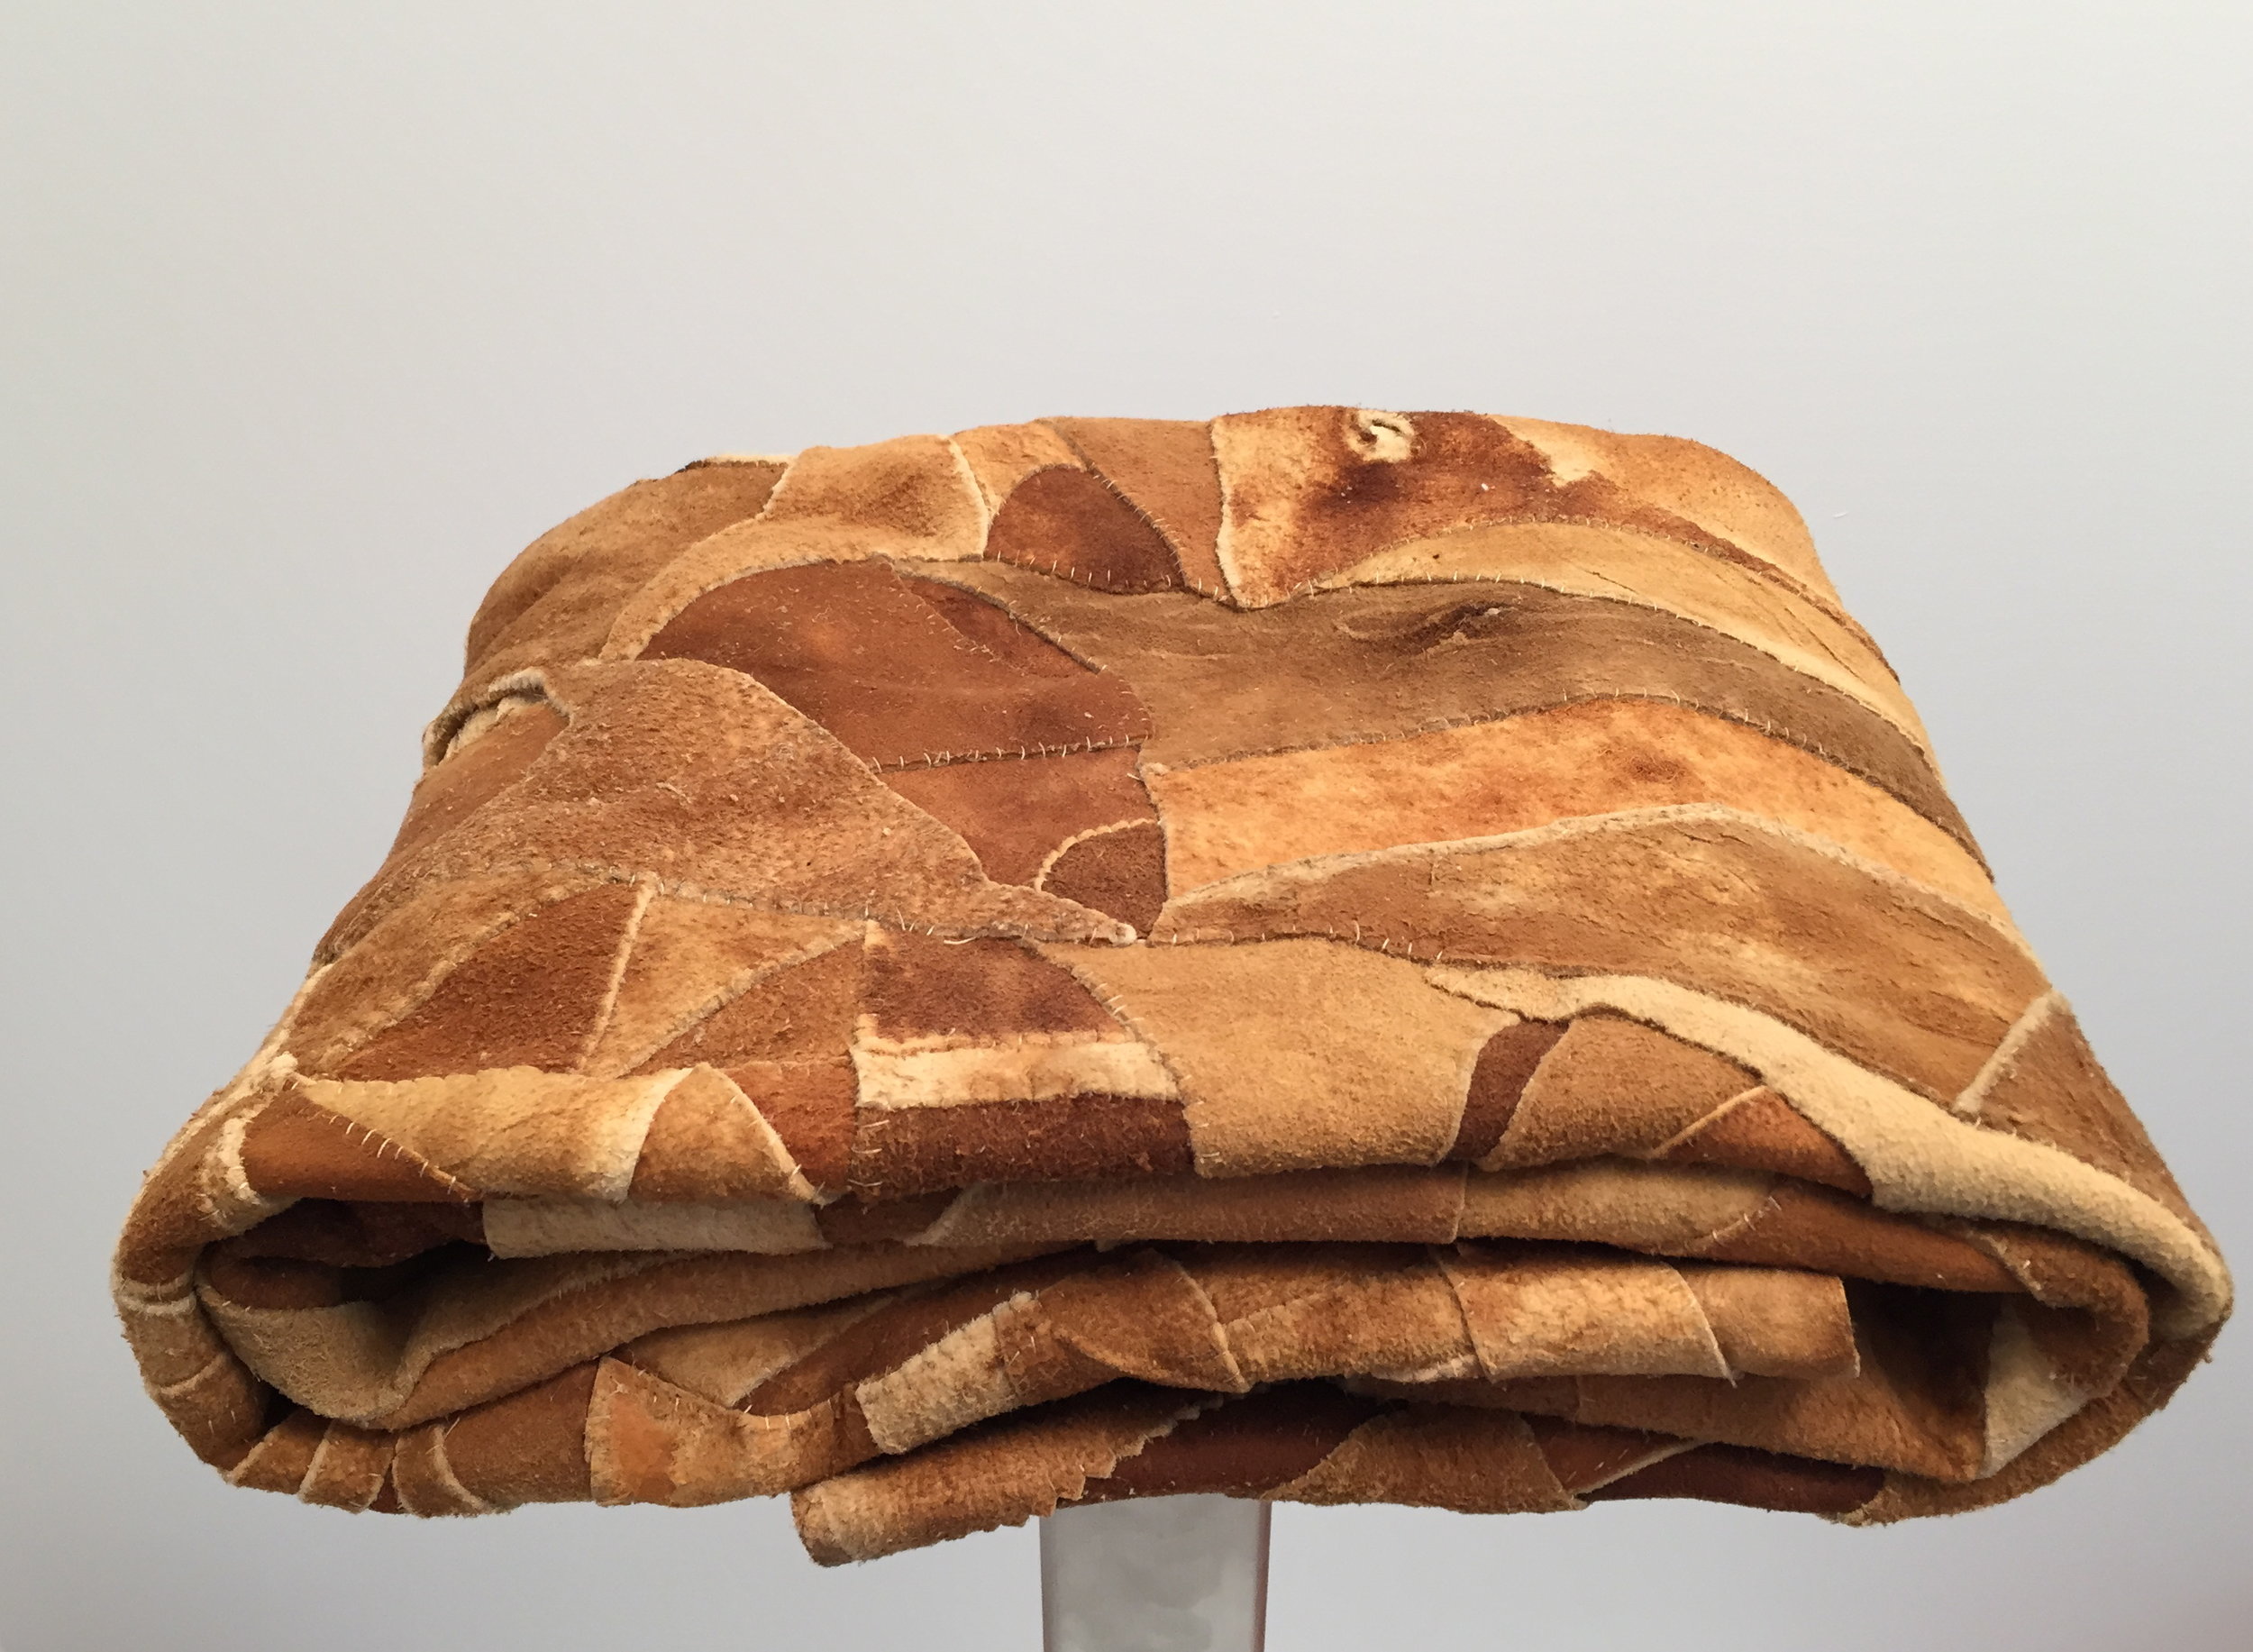   This is Not a Hudson's Bay Blanket ,&nbsp;2015 Moosehide blanket on aluminum plinth, 14” x 14” x 7”   